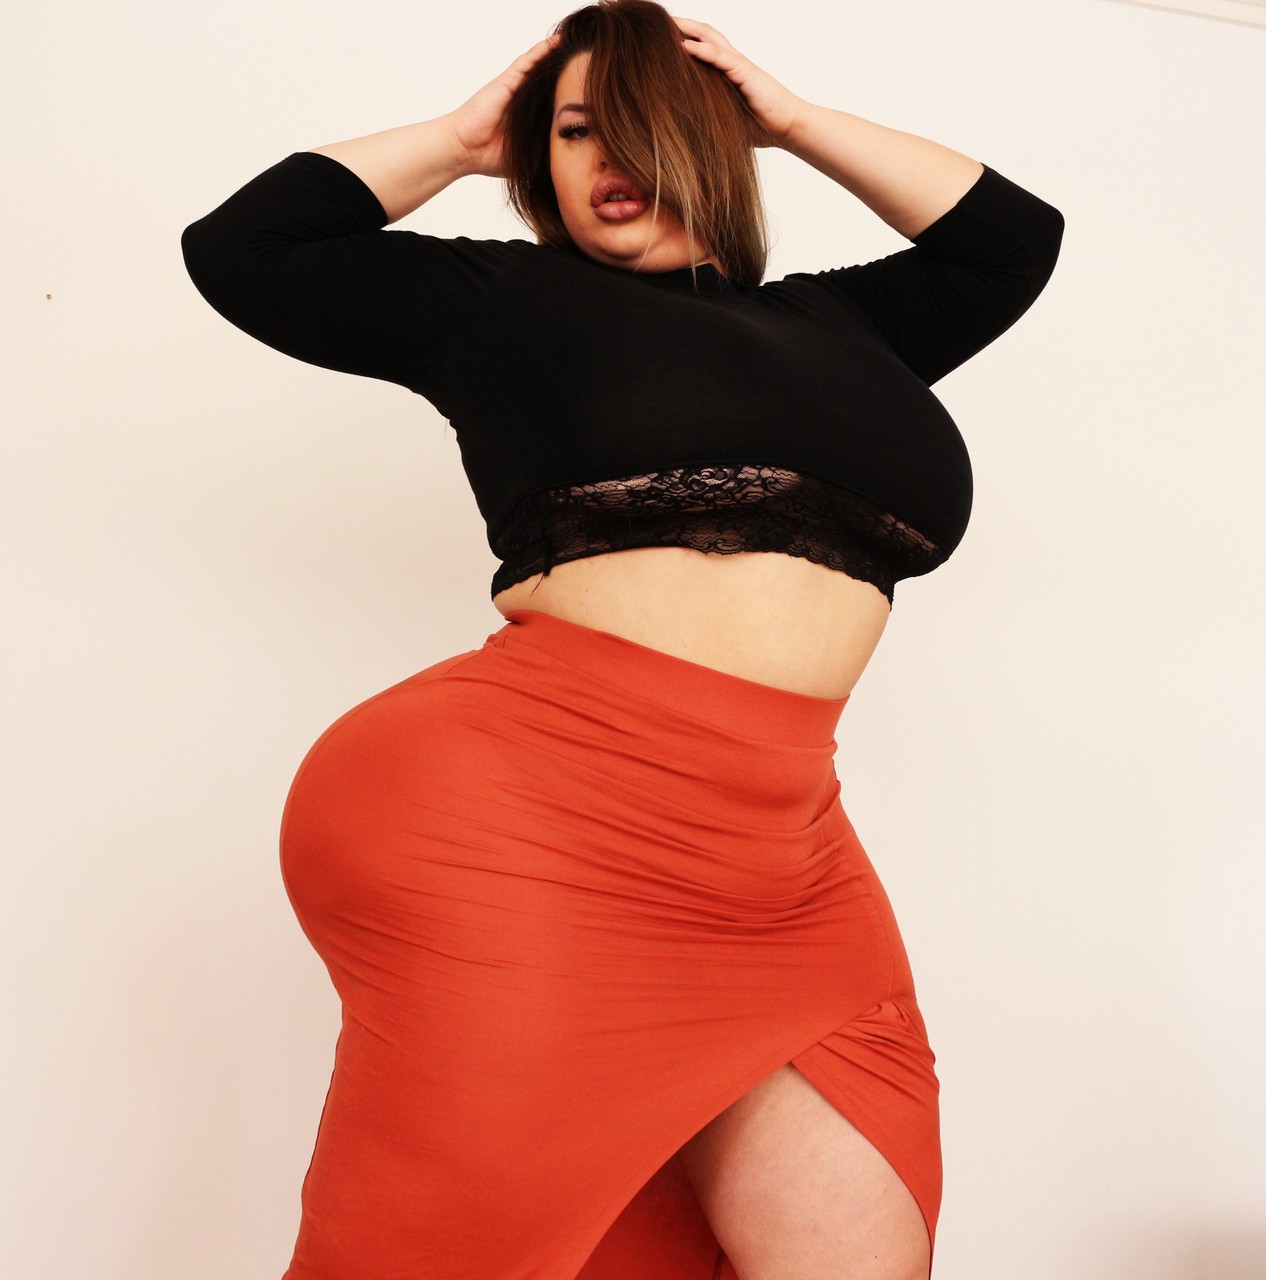 Stunning MILF fatty Natasha Crown flaunting her very big ass in a tight skirt zdjęcie porno #423816664 | Natasha Crown Pics, Natasha Crown, BBW, mobilne porno